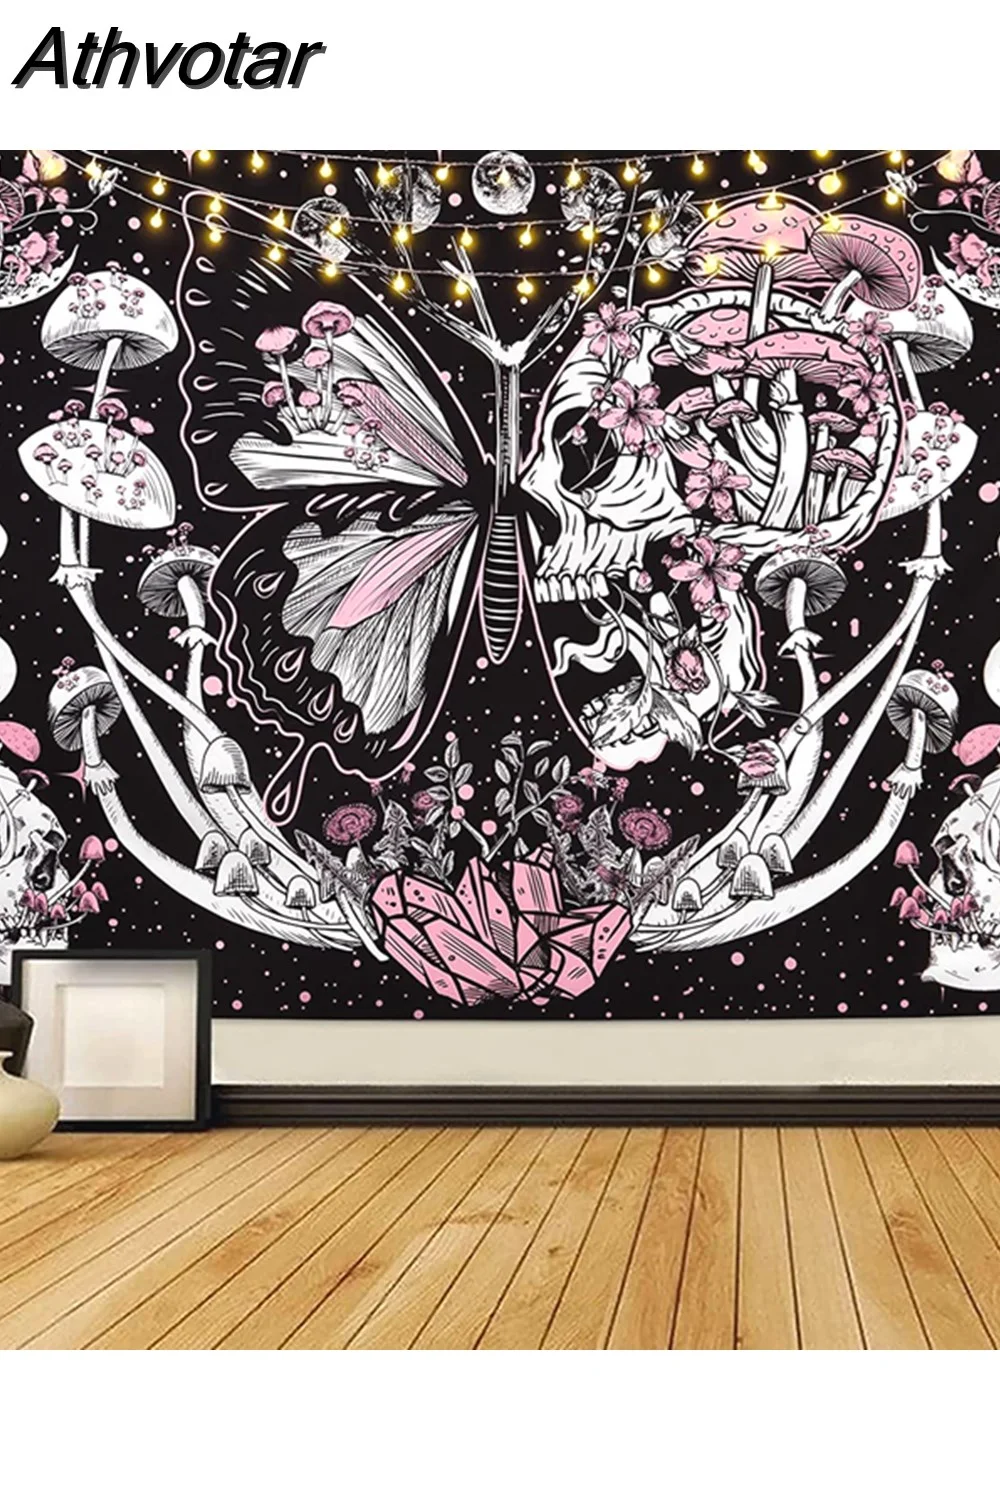 Athvotar Tapestry Hippie Mushroom Tapiz Aesthetic Moth Wall Hanging Moon Star Snake Bedroom Art Decortion Home Room Decor